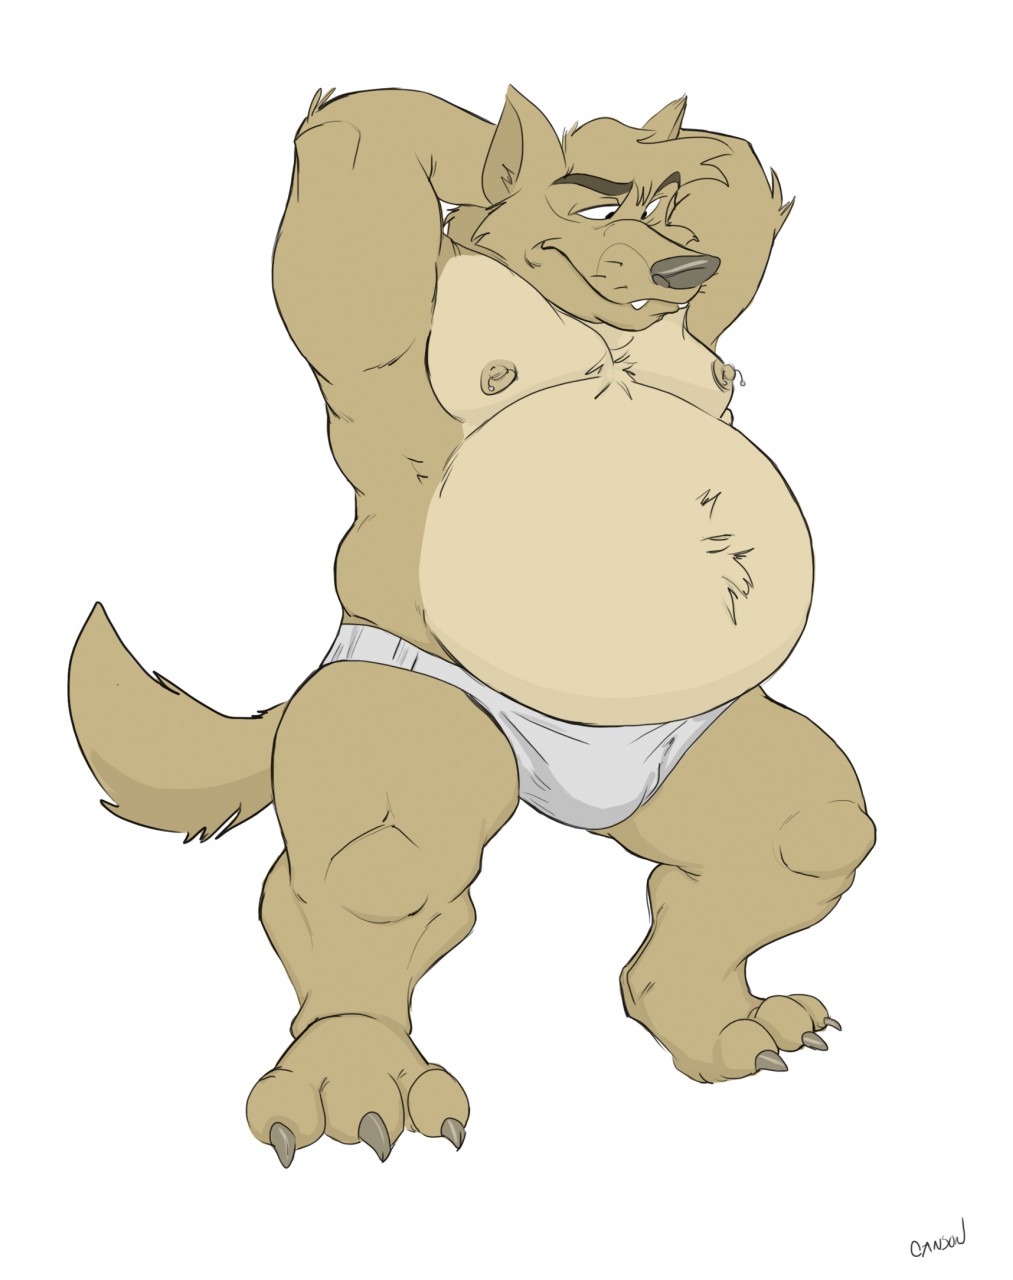 Furry big belly. Волк belly. Волк belly fat. Furry Wolf belly. Big belly Wolf boy.